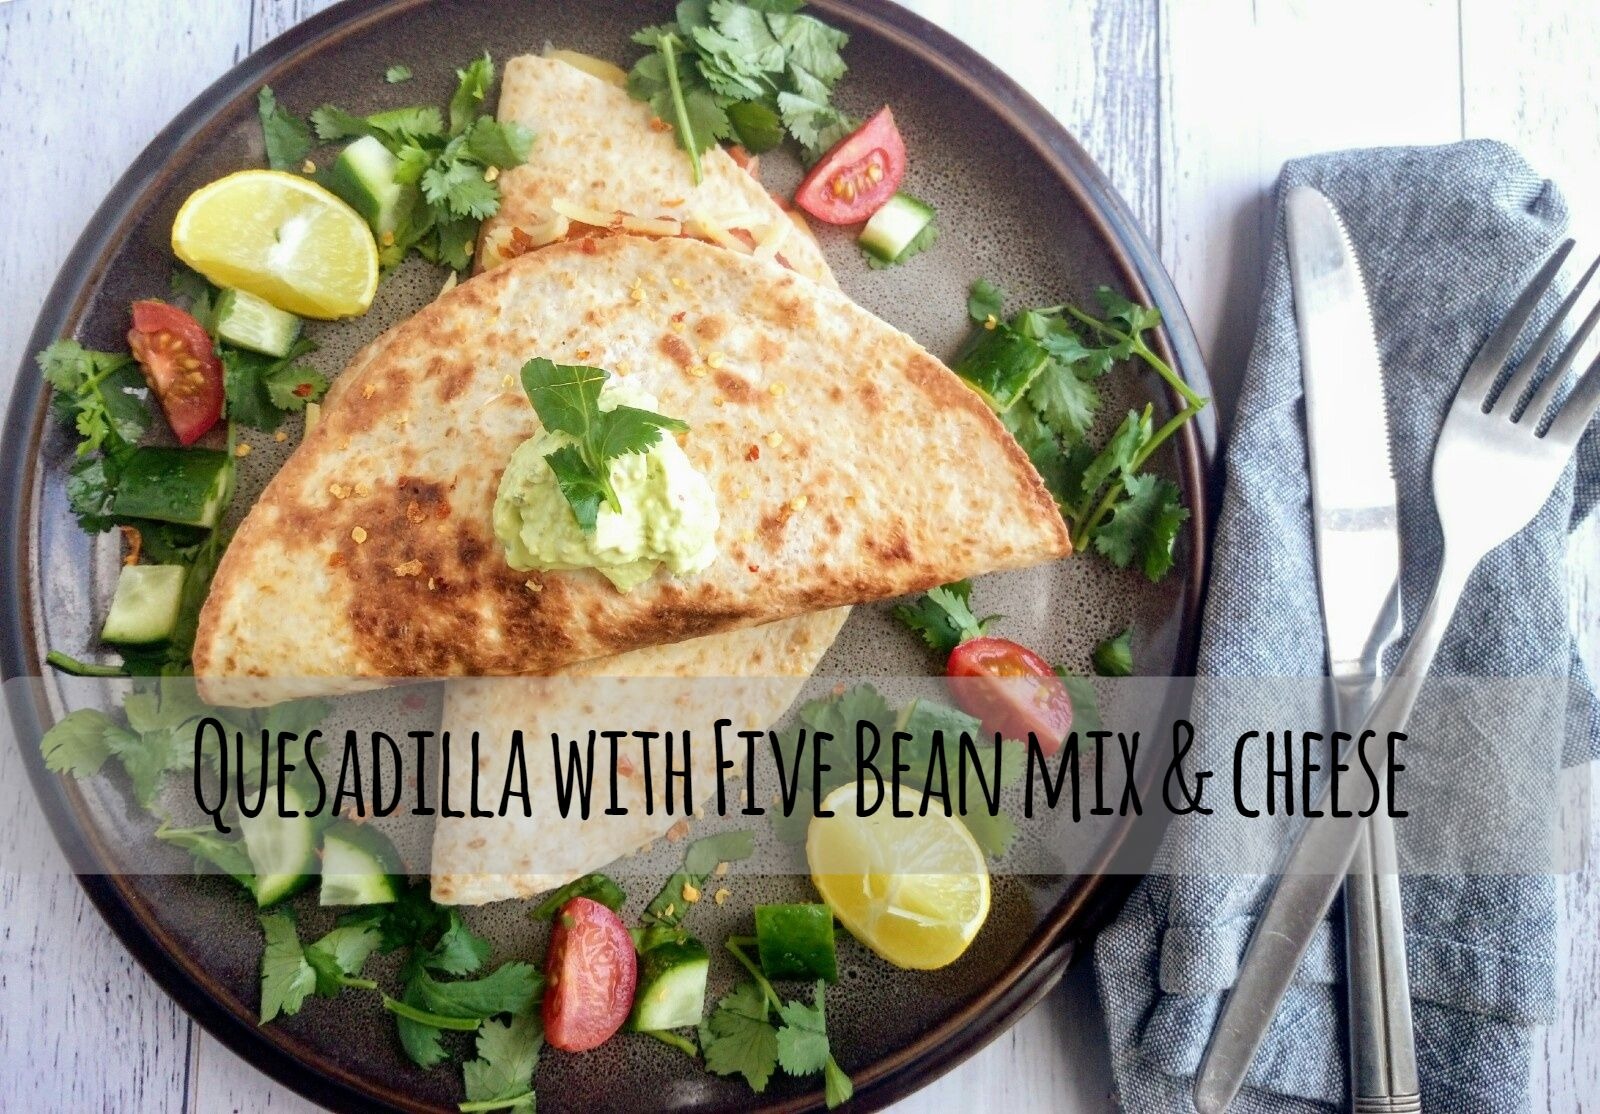 Quesadillas Five bean mix & cheese